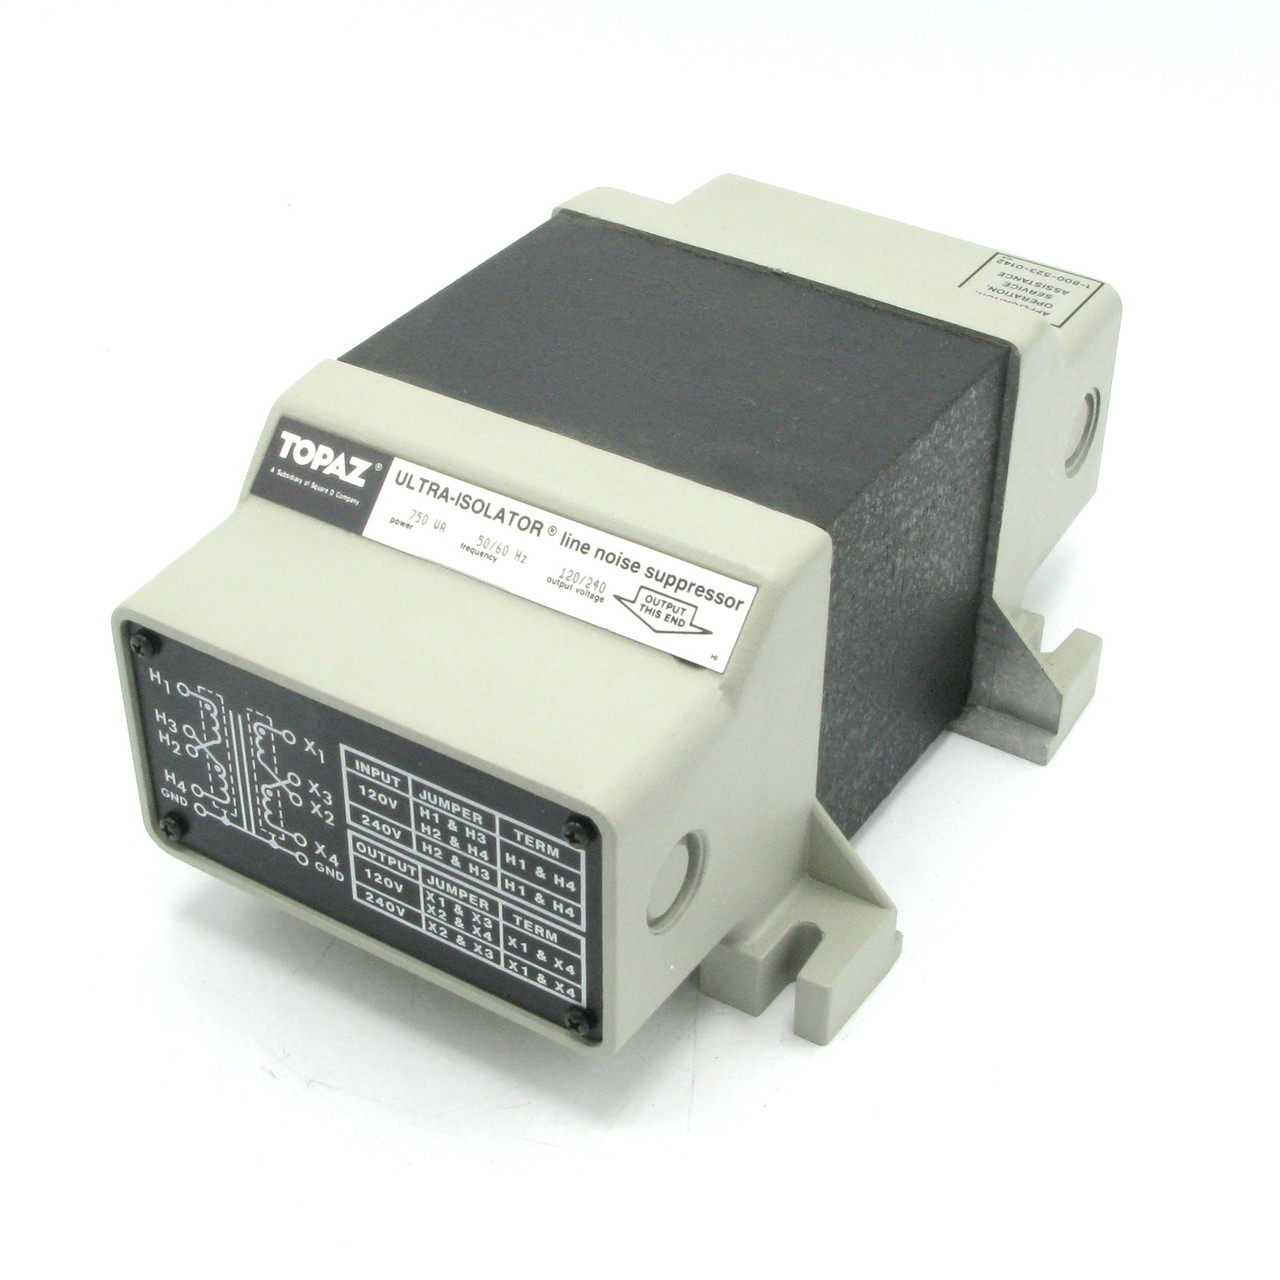 Topaz 91097-31 Ultra Isolator Transformer